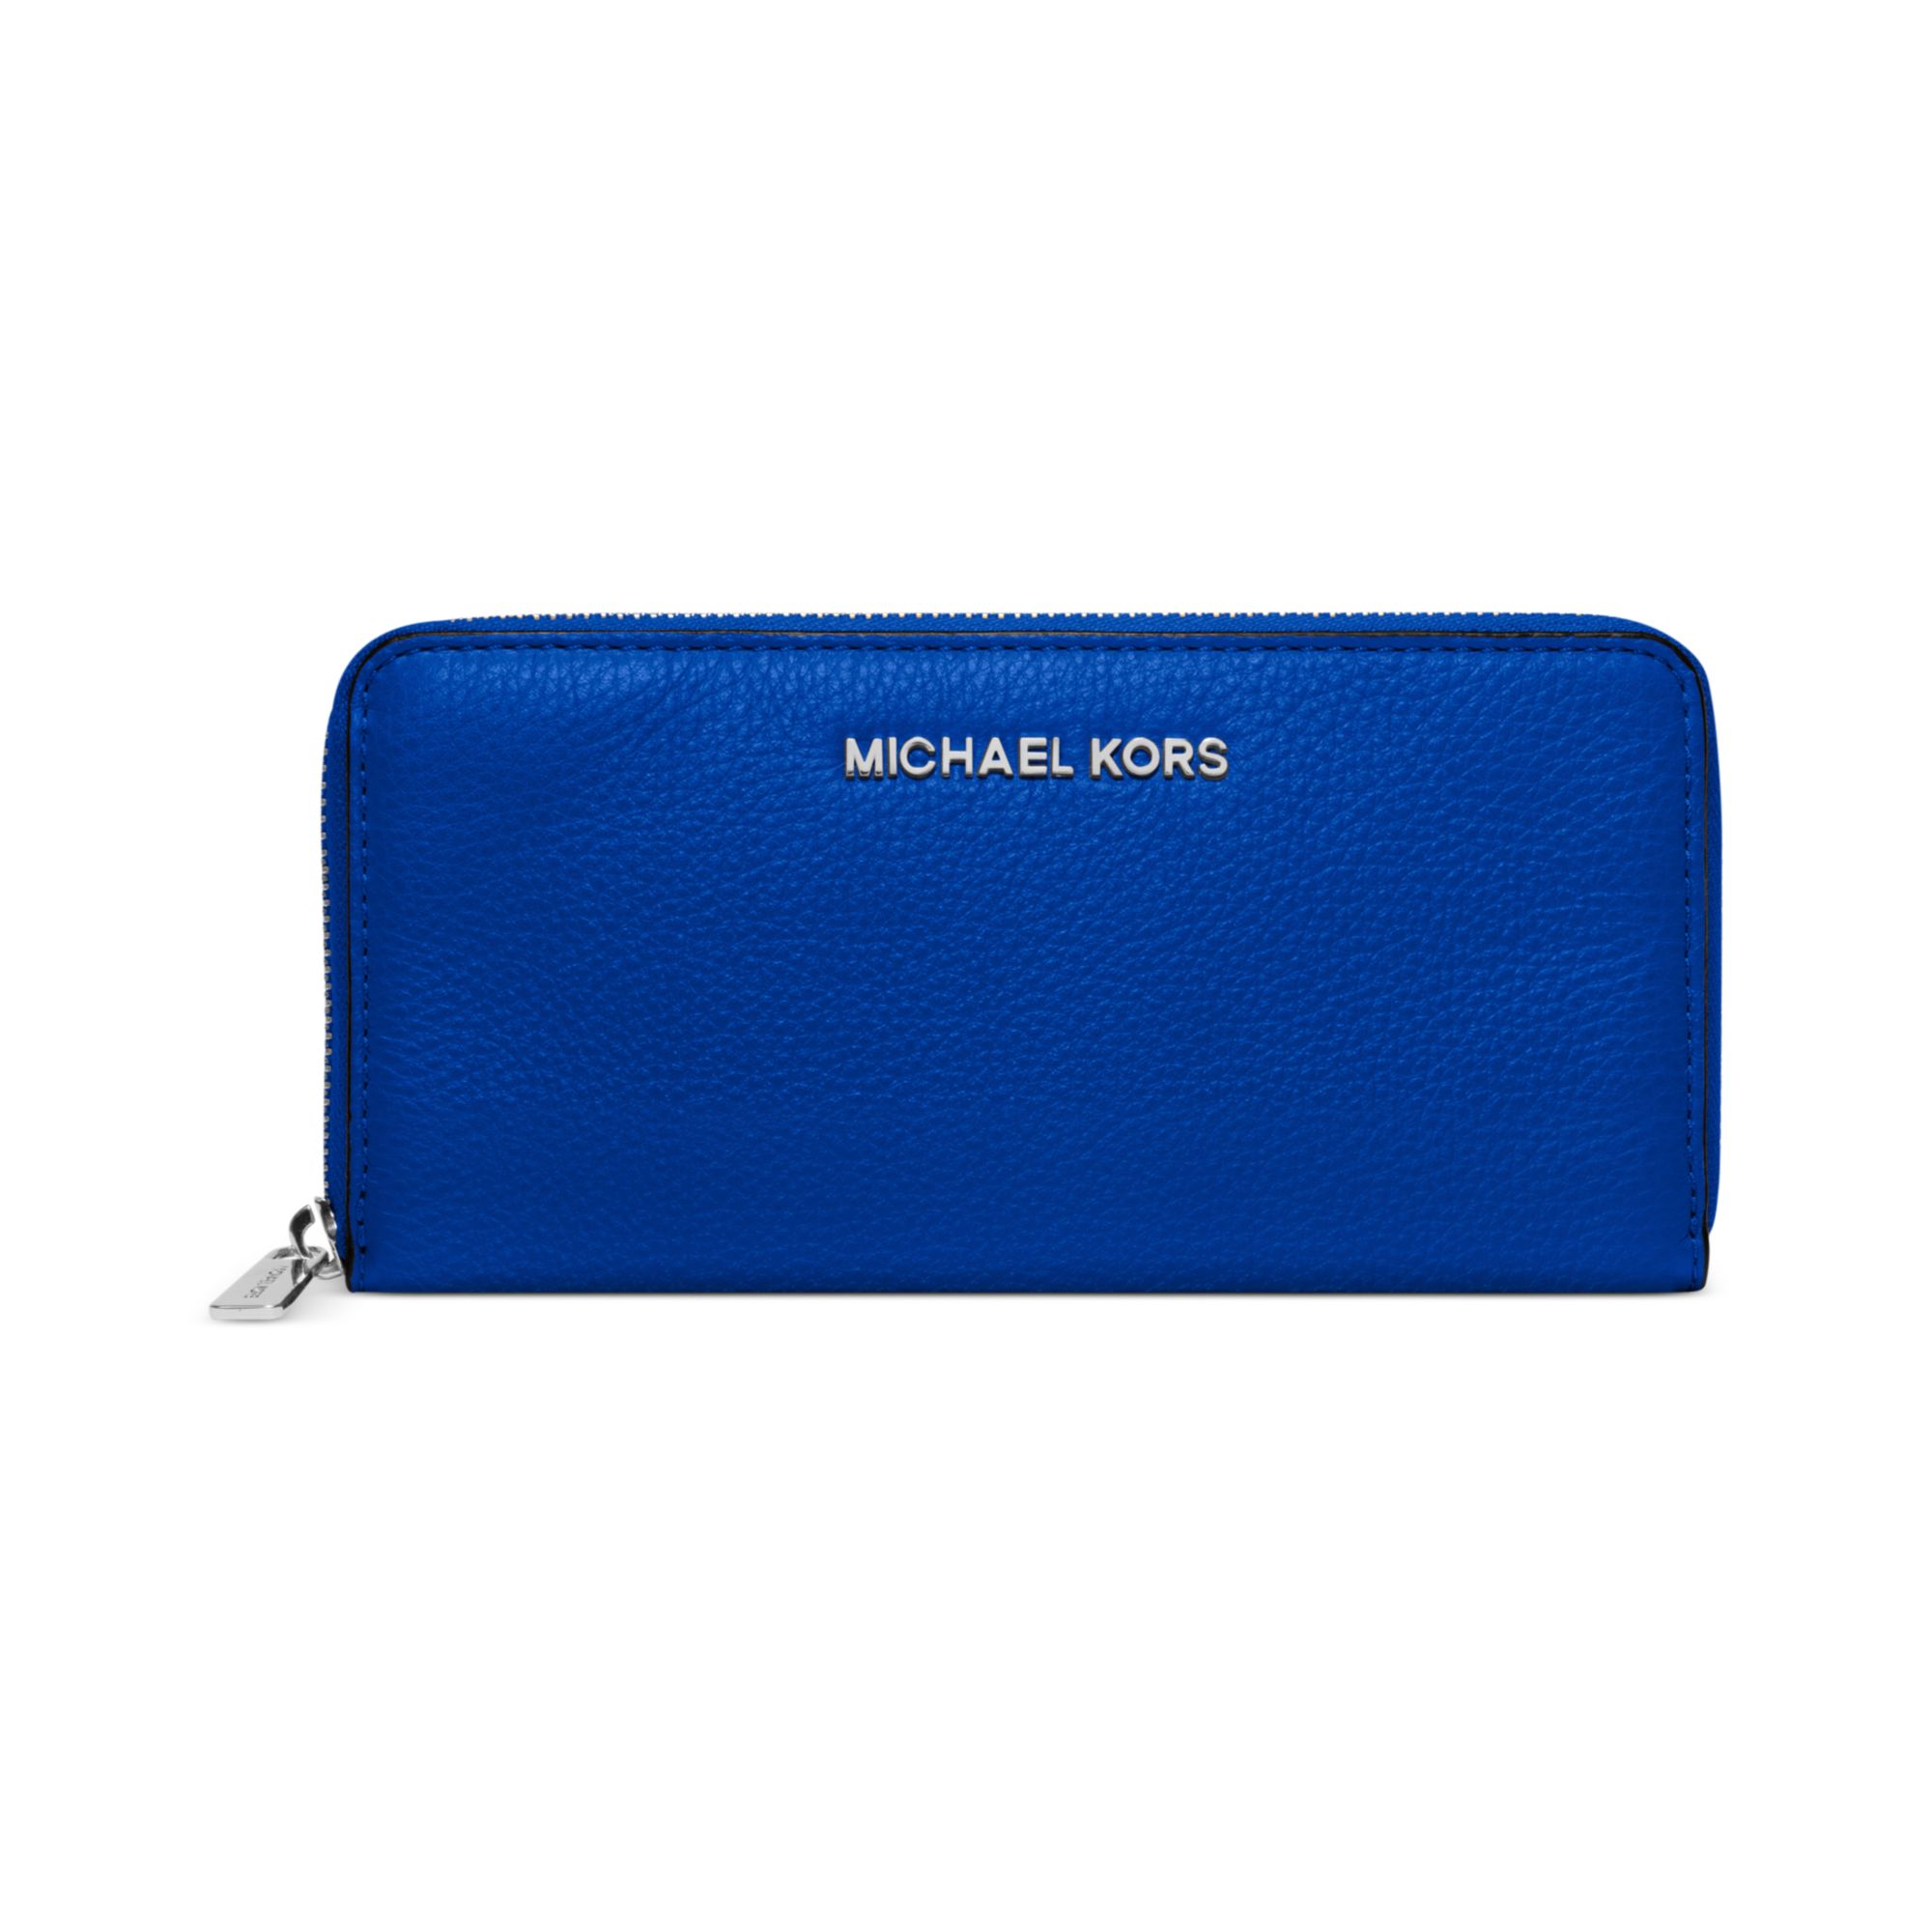 Lyst - Michael Kors Bedford Zip Around Continental Wallet in Blue